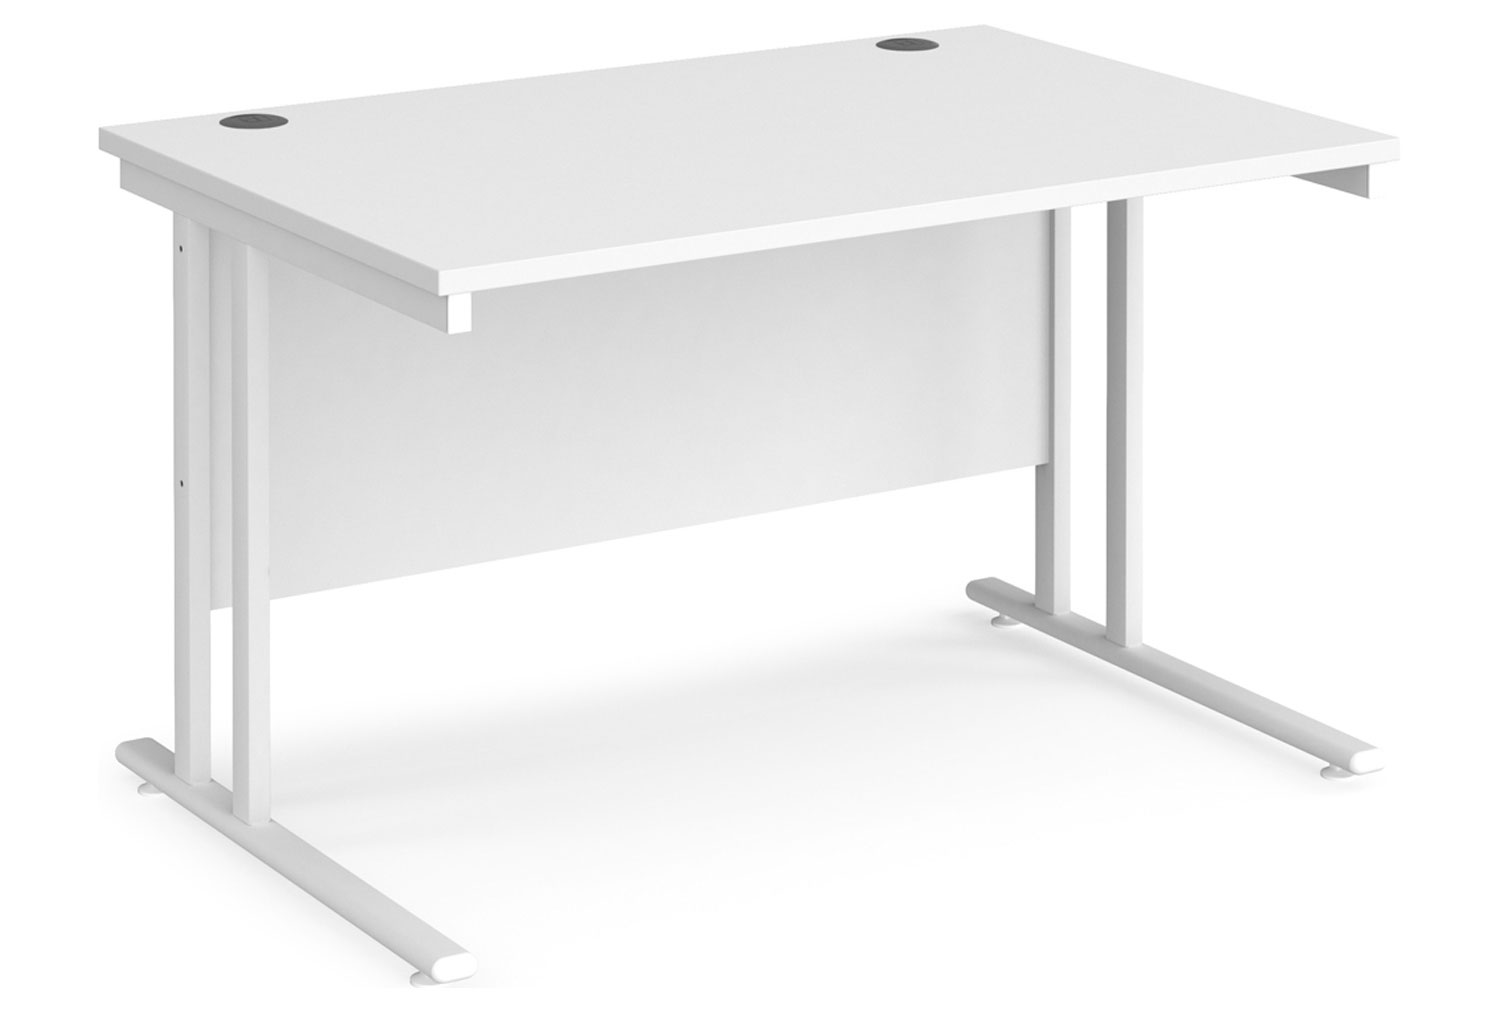 Value Line Deluxe C-Leg Rectangular Office Desk (White Legs), 120wx80dx73h (cm), White, Express Delivery